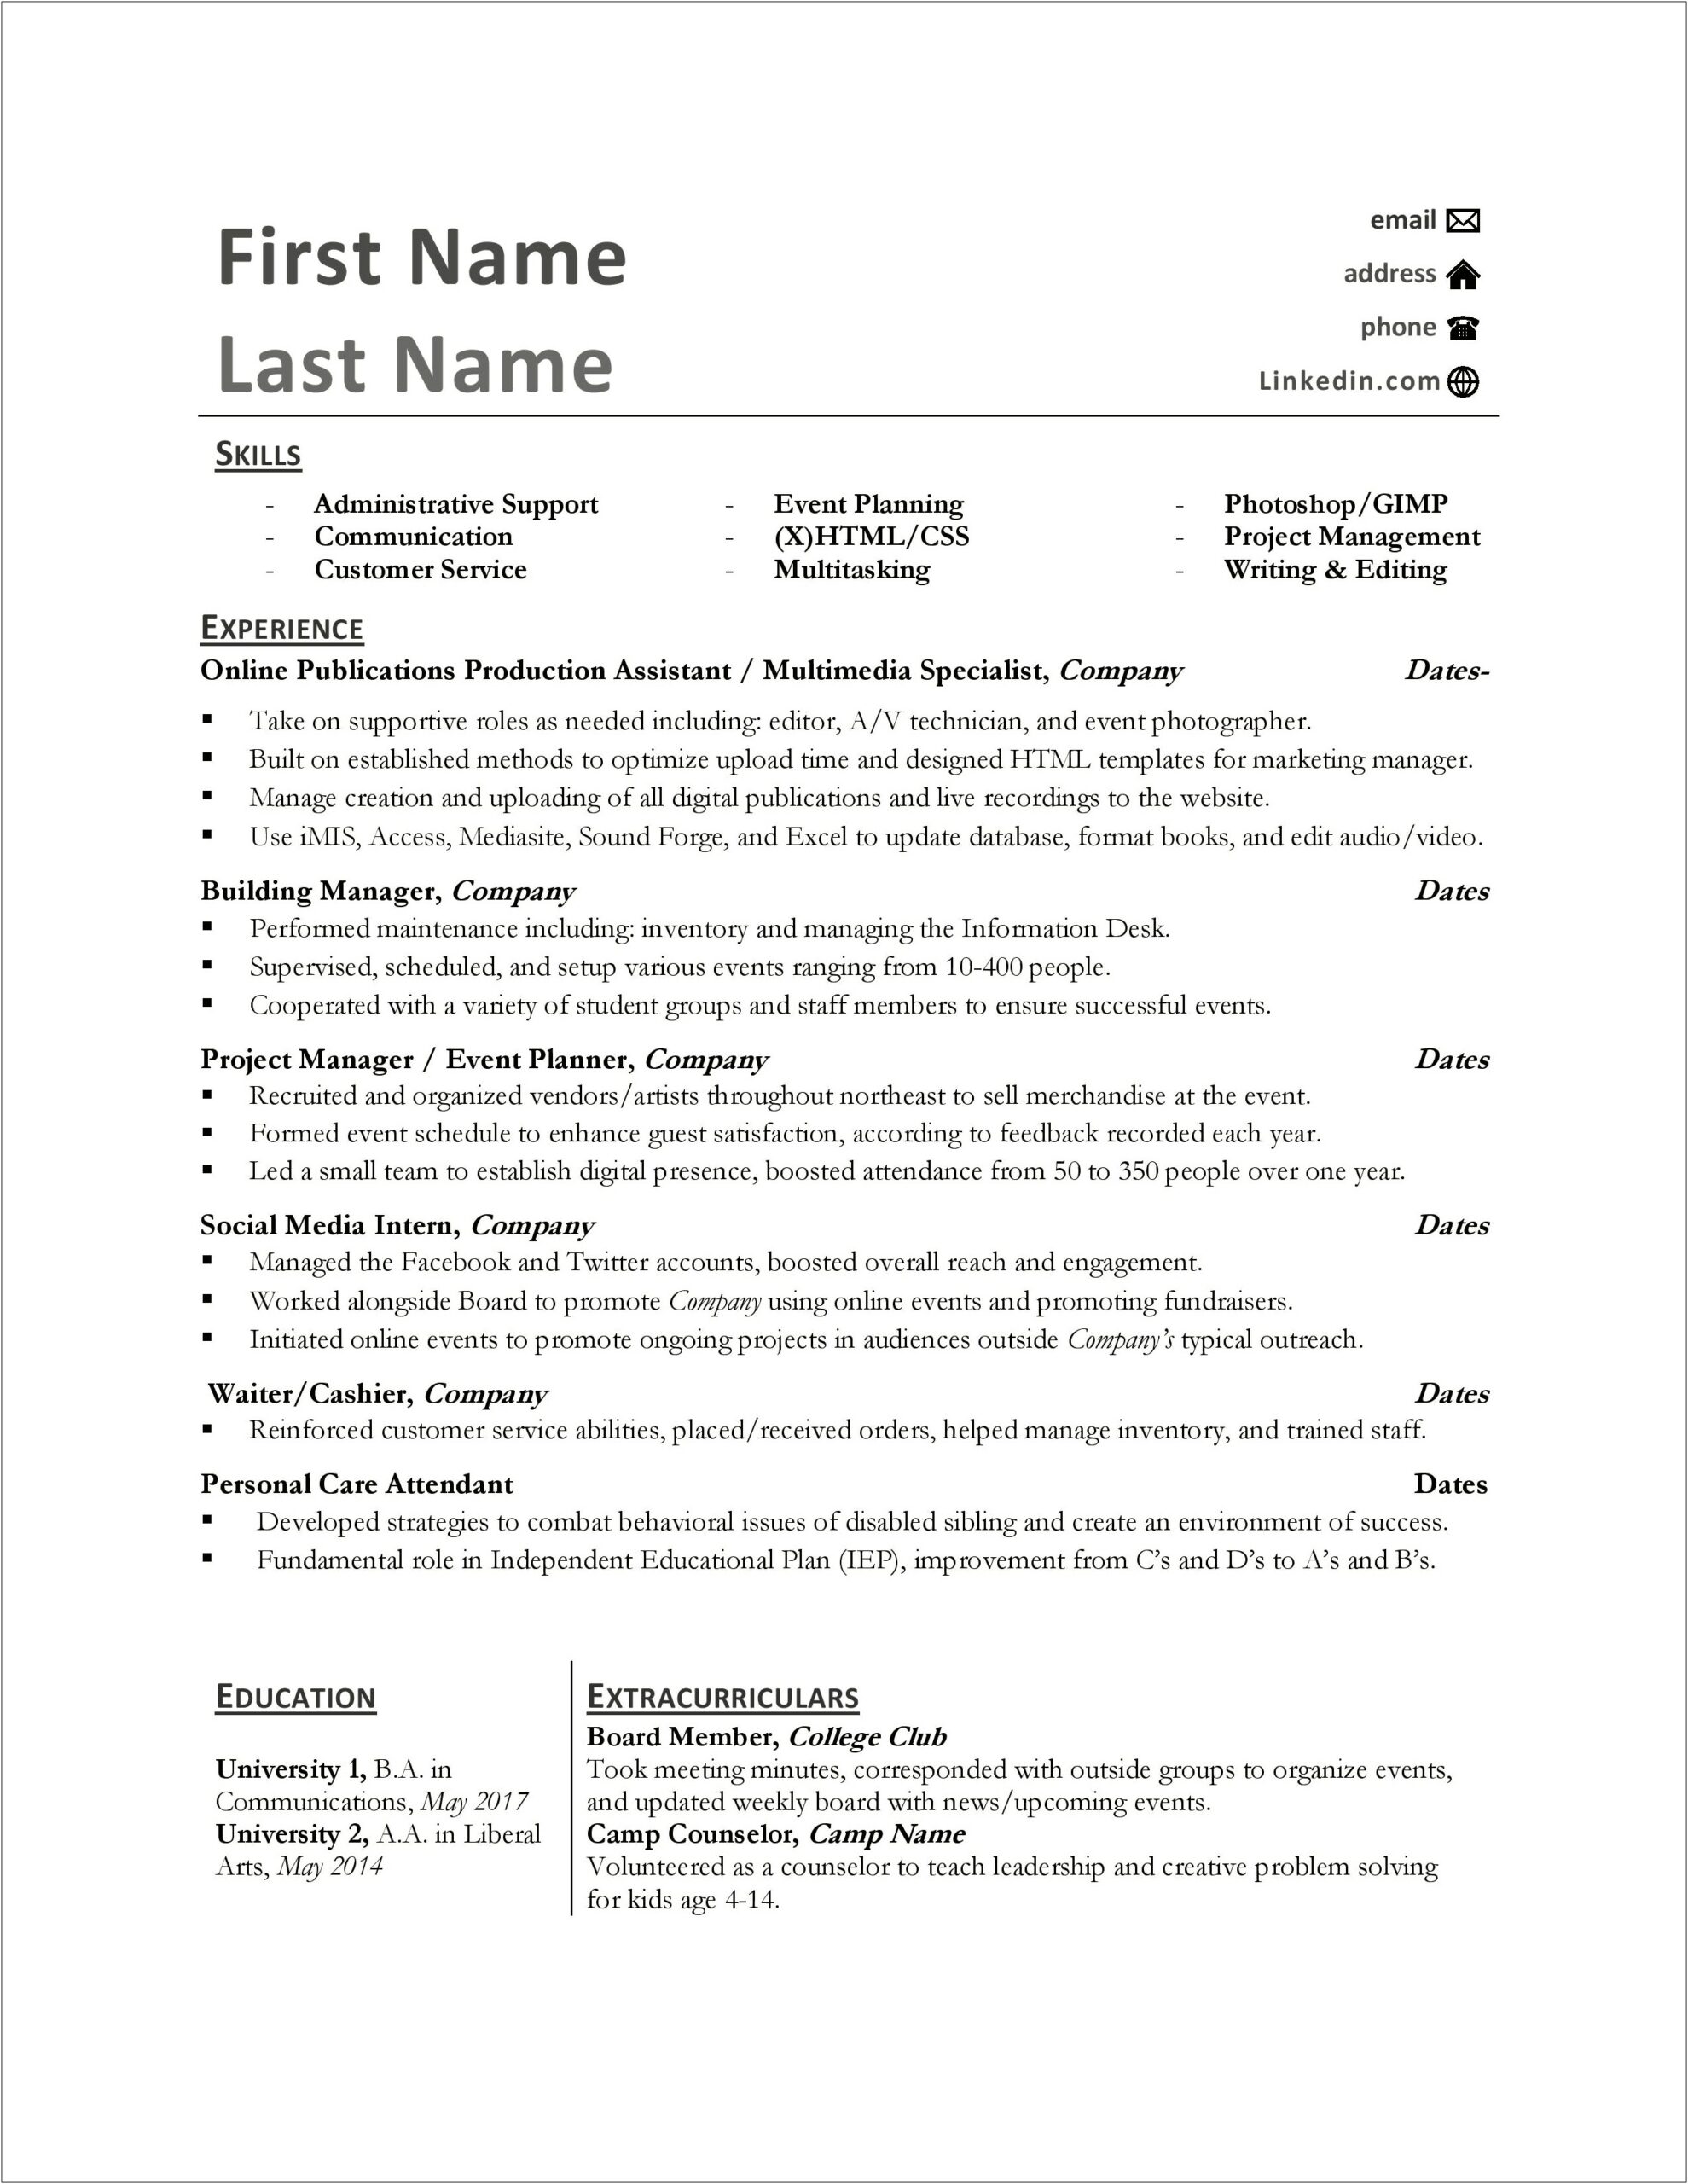 Resume Several Jobs At One Company